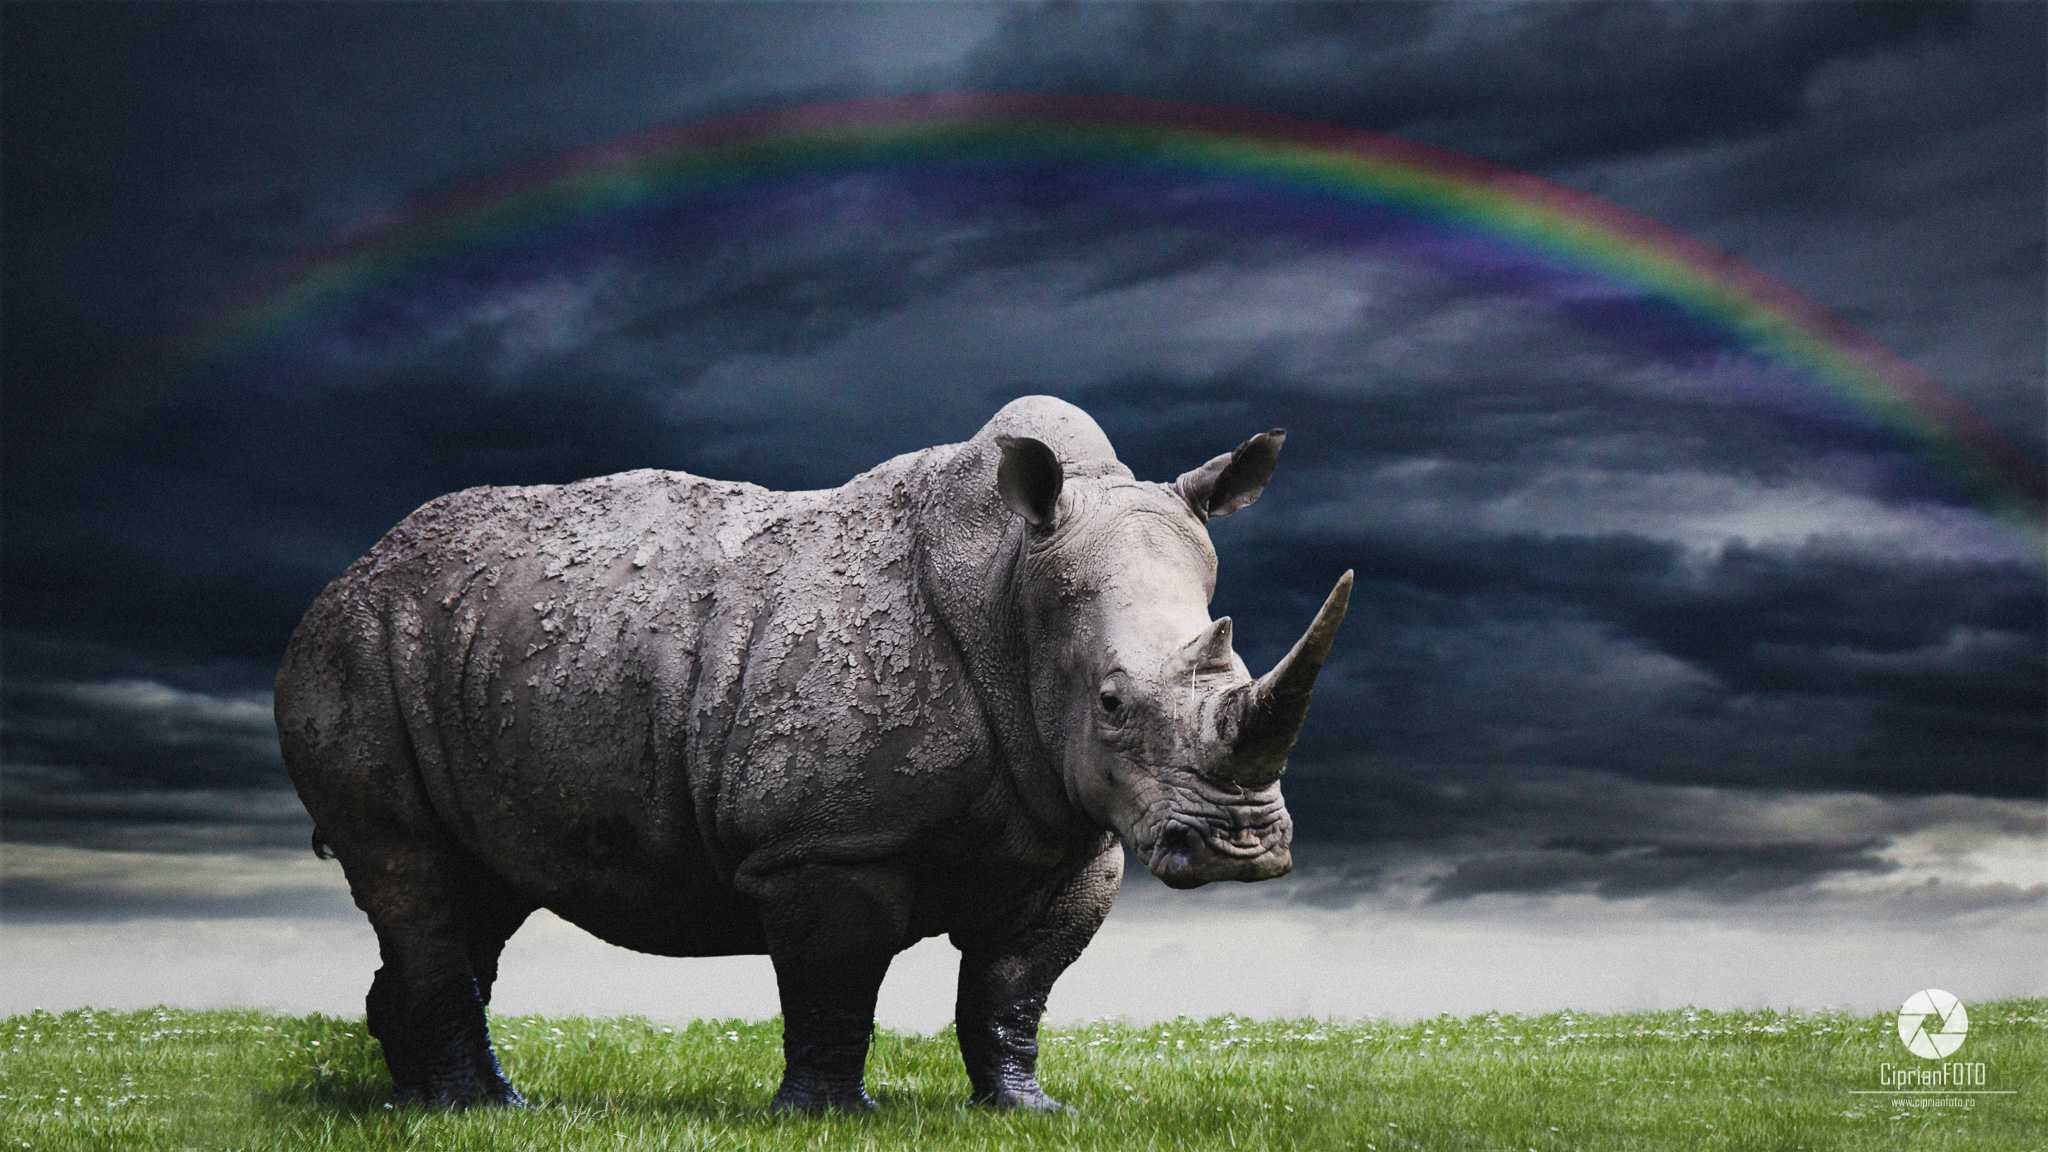 The Rhino, Photoshop Manipulation Tutorial, CiprianFOTO